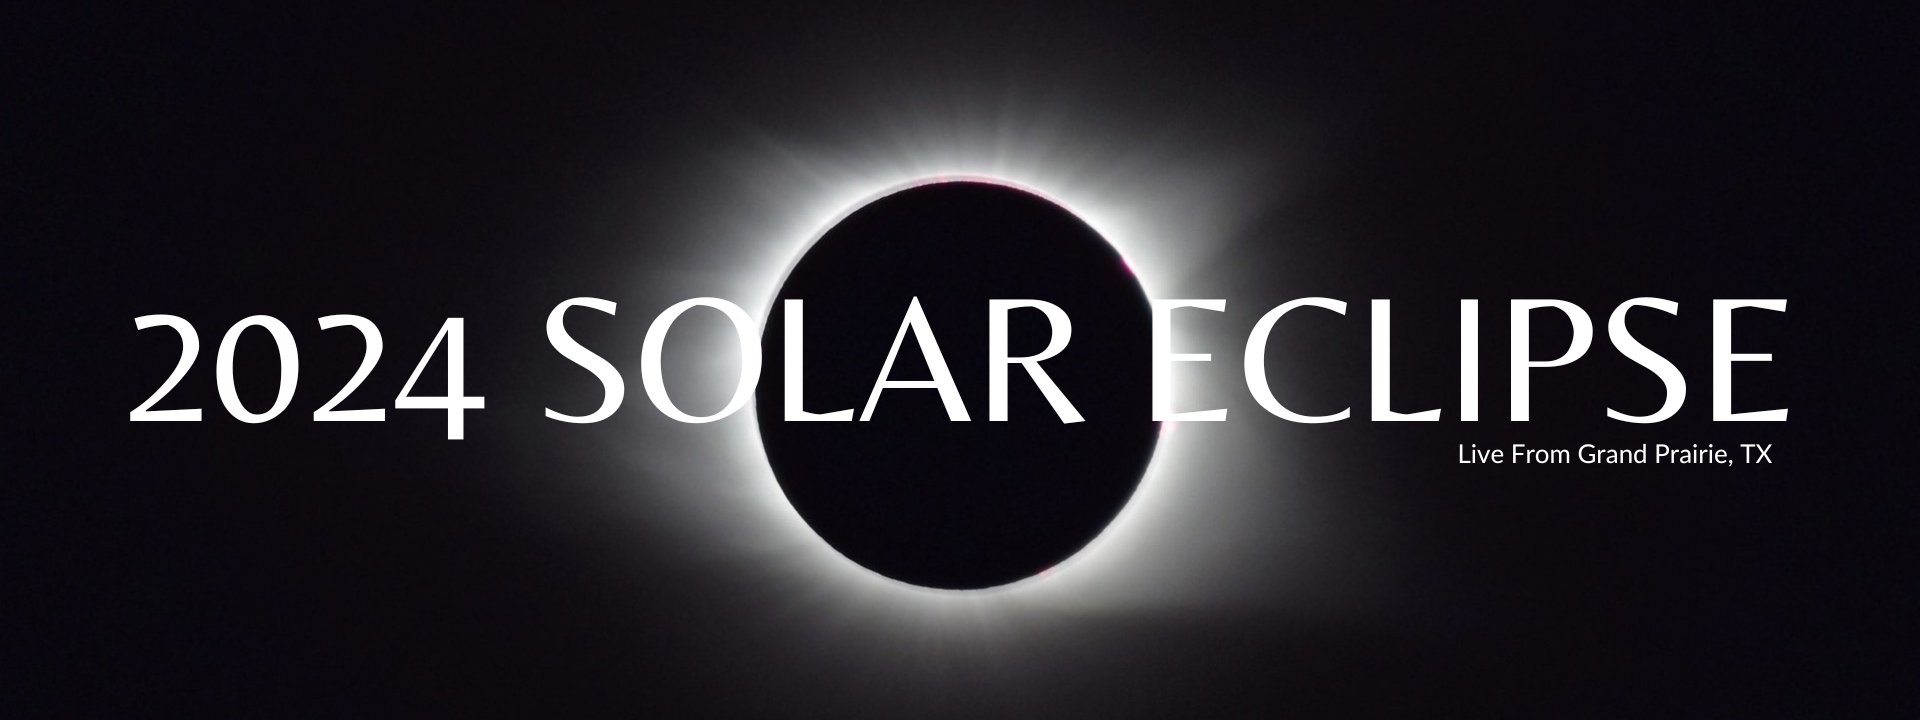 Solar Eclipse 2024 Visit Grand Prairie